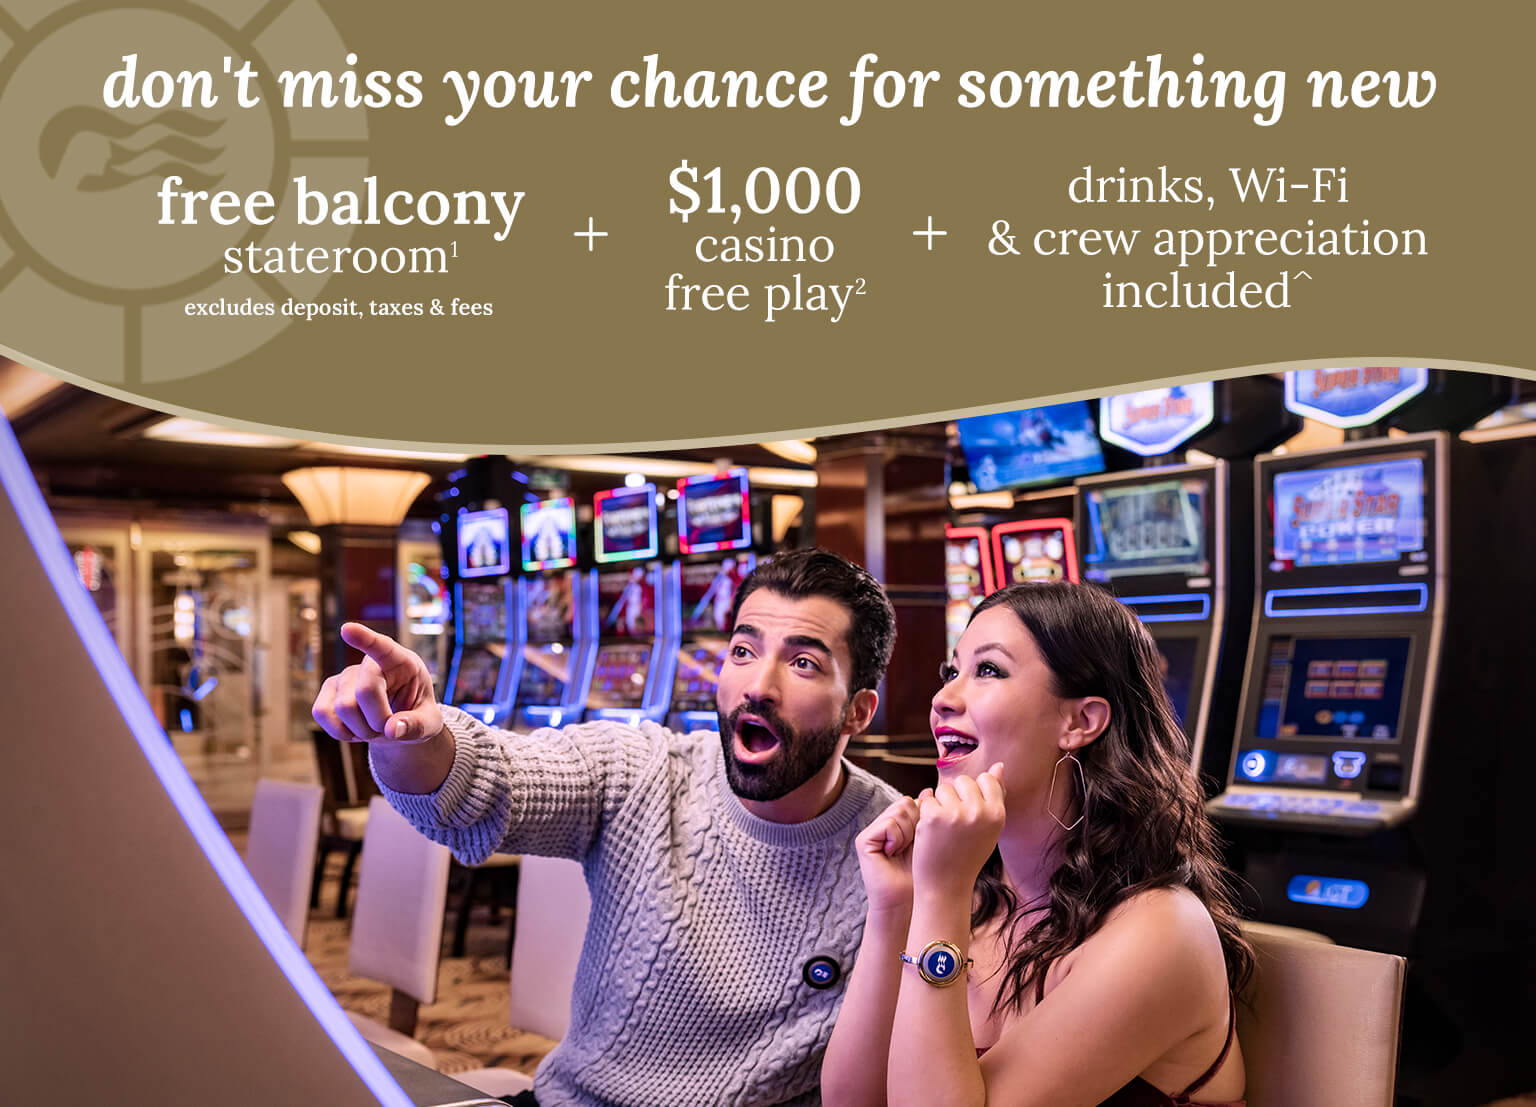 free balcony stateroom + $1,000 casino free play + drinks, Wi-Fi & crew appreciation included